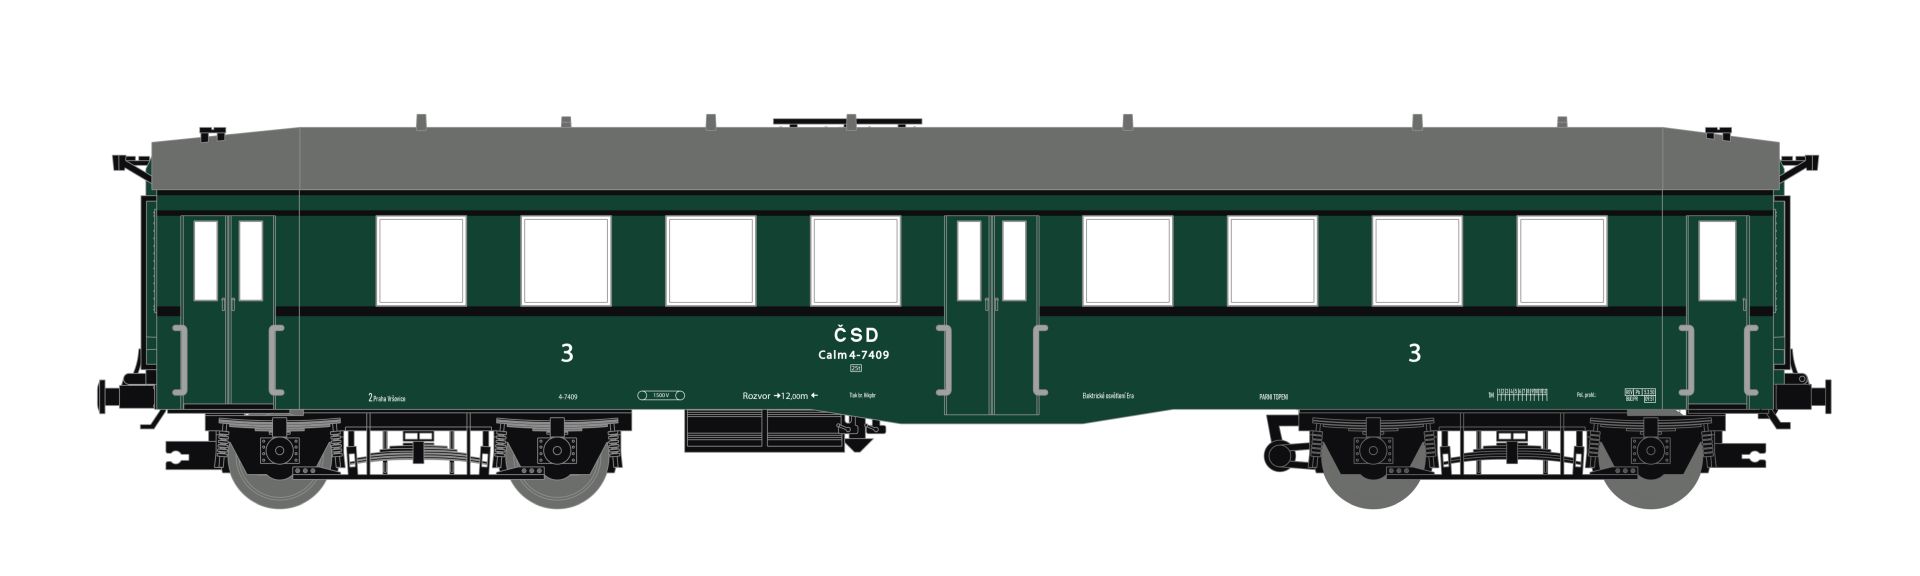 Saxonia 120054 - Personenwagen Bauart 'Altenberg', ex. C4itr, CSD, Ep.III